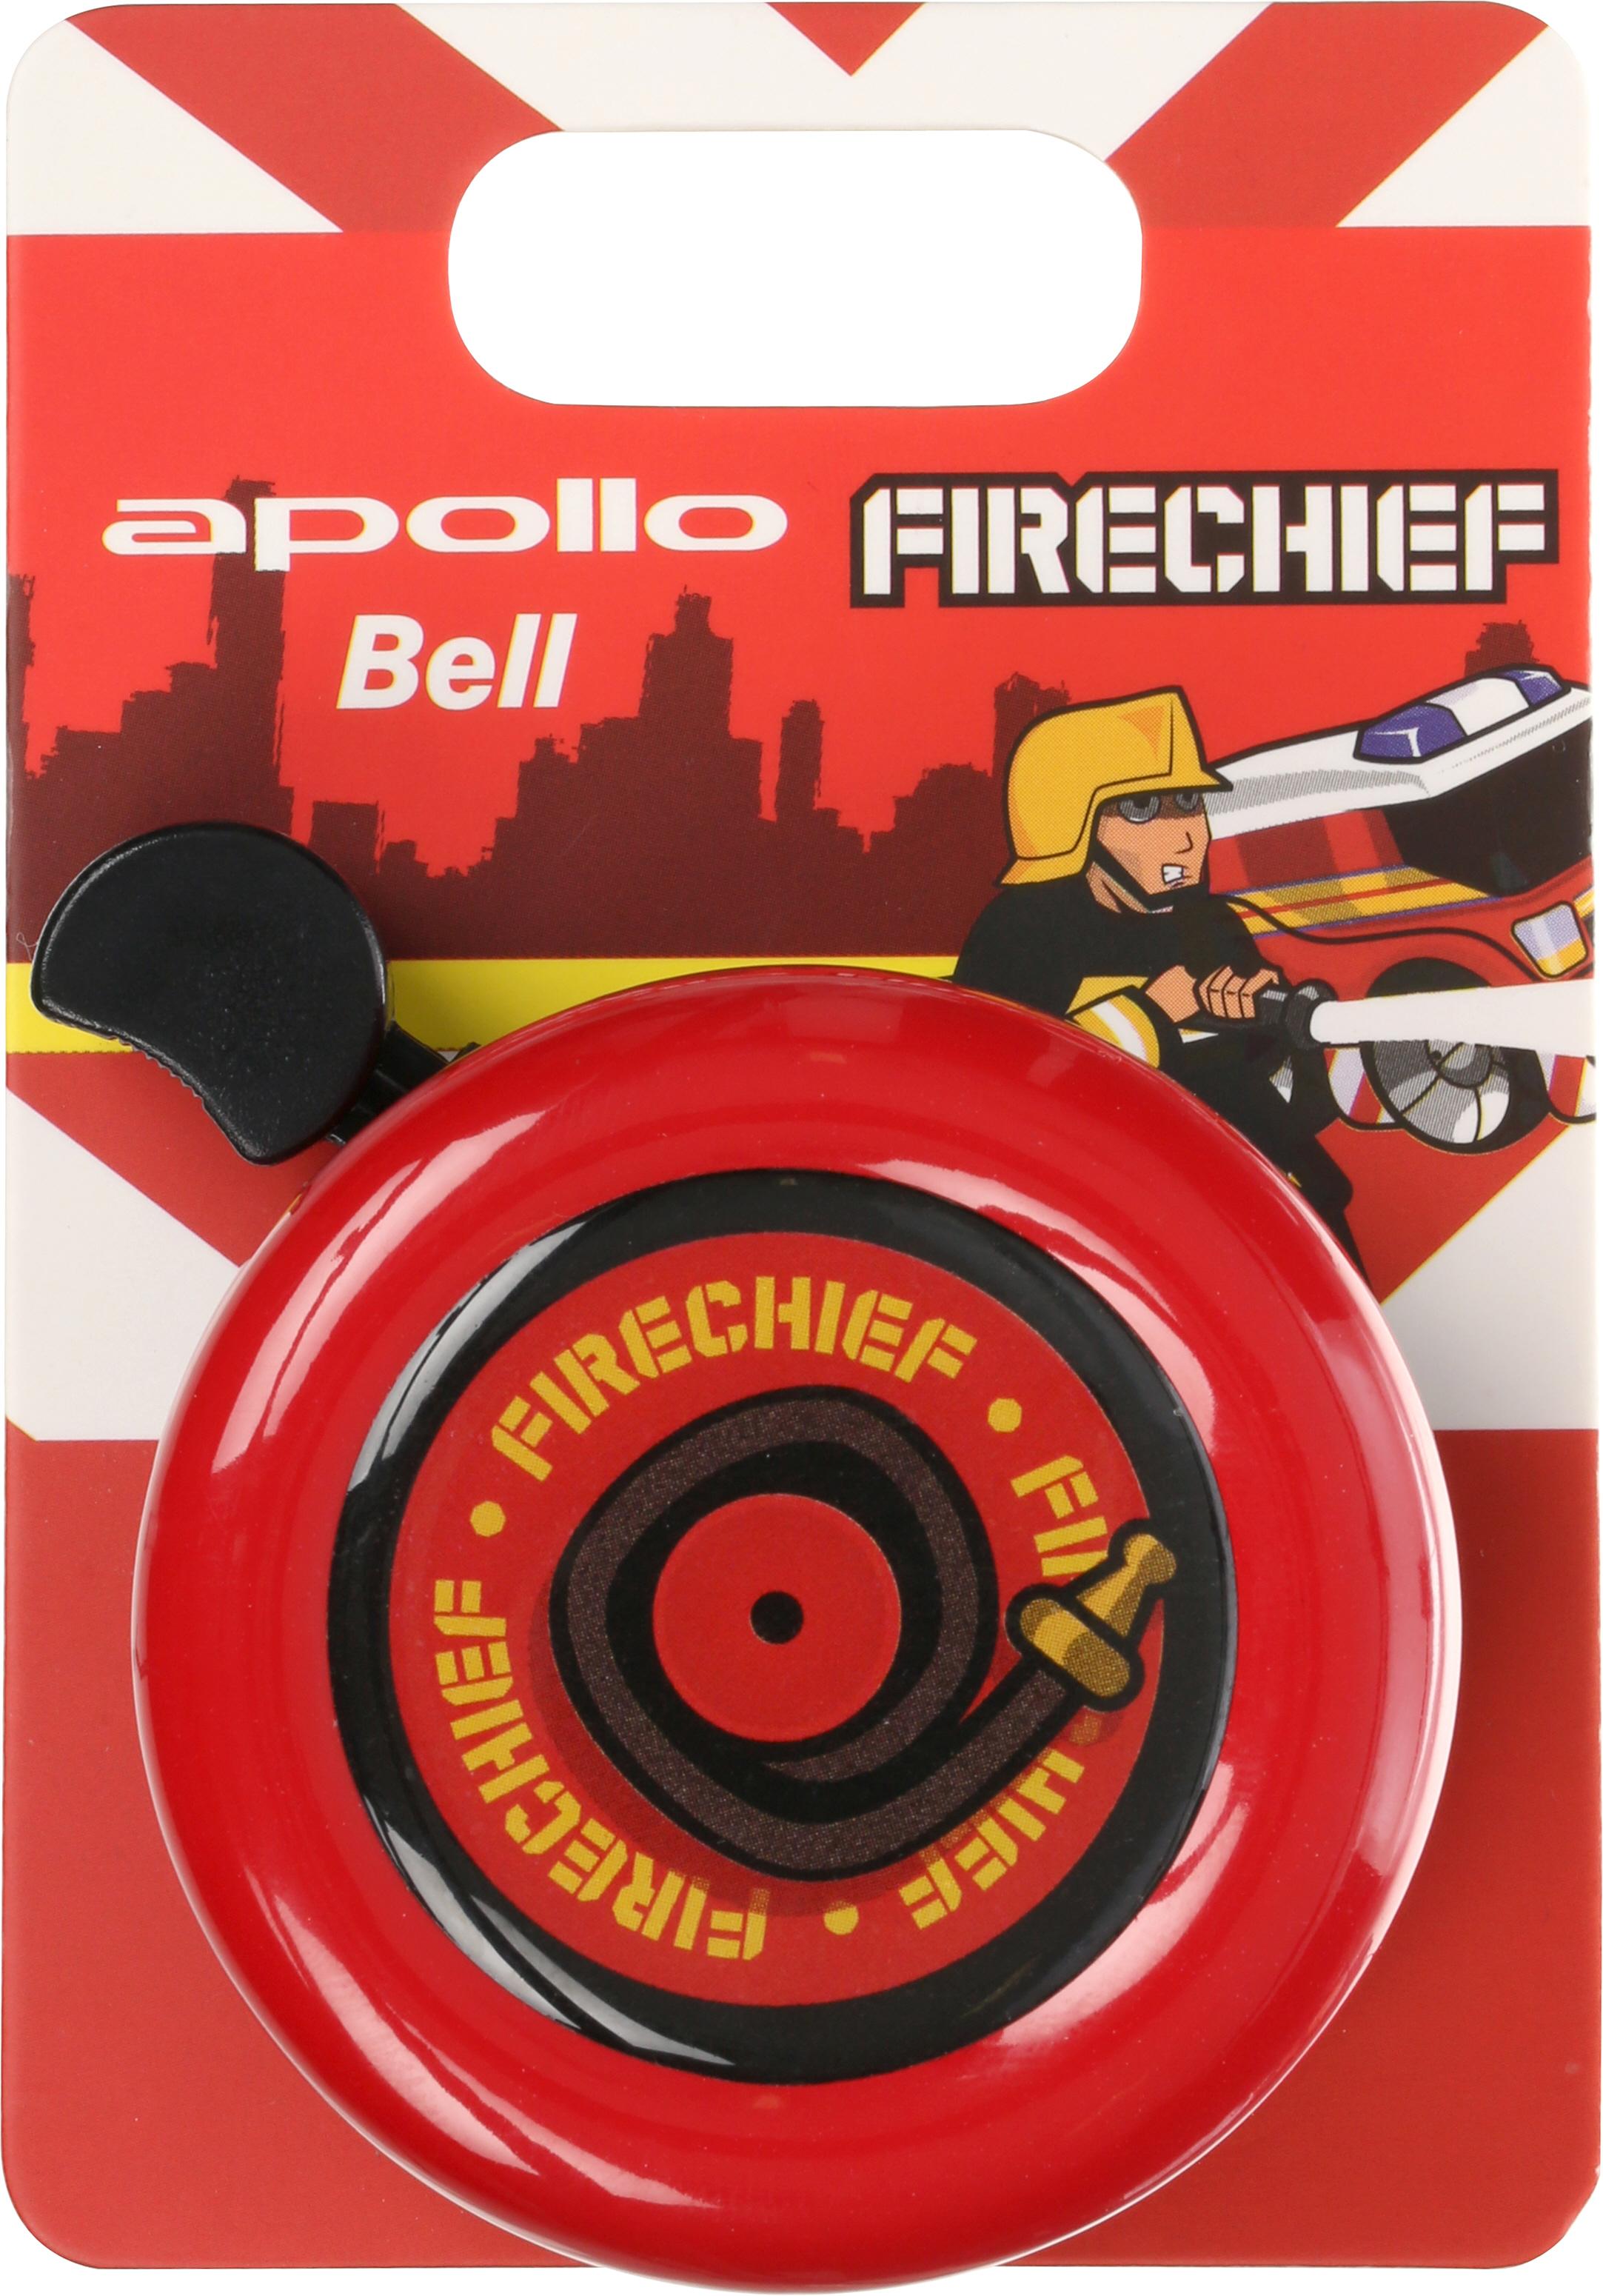 Apollo Firechief Bike Bell | Halfords UK